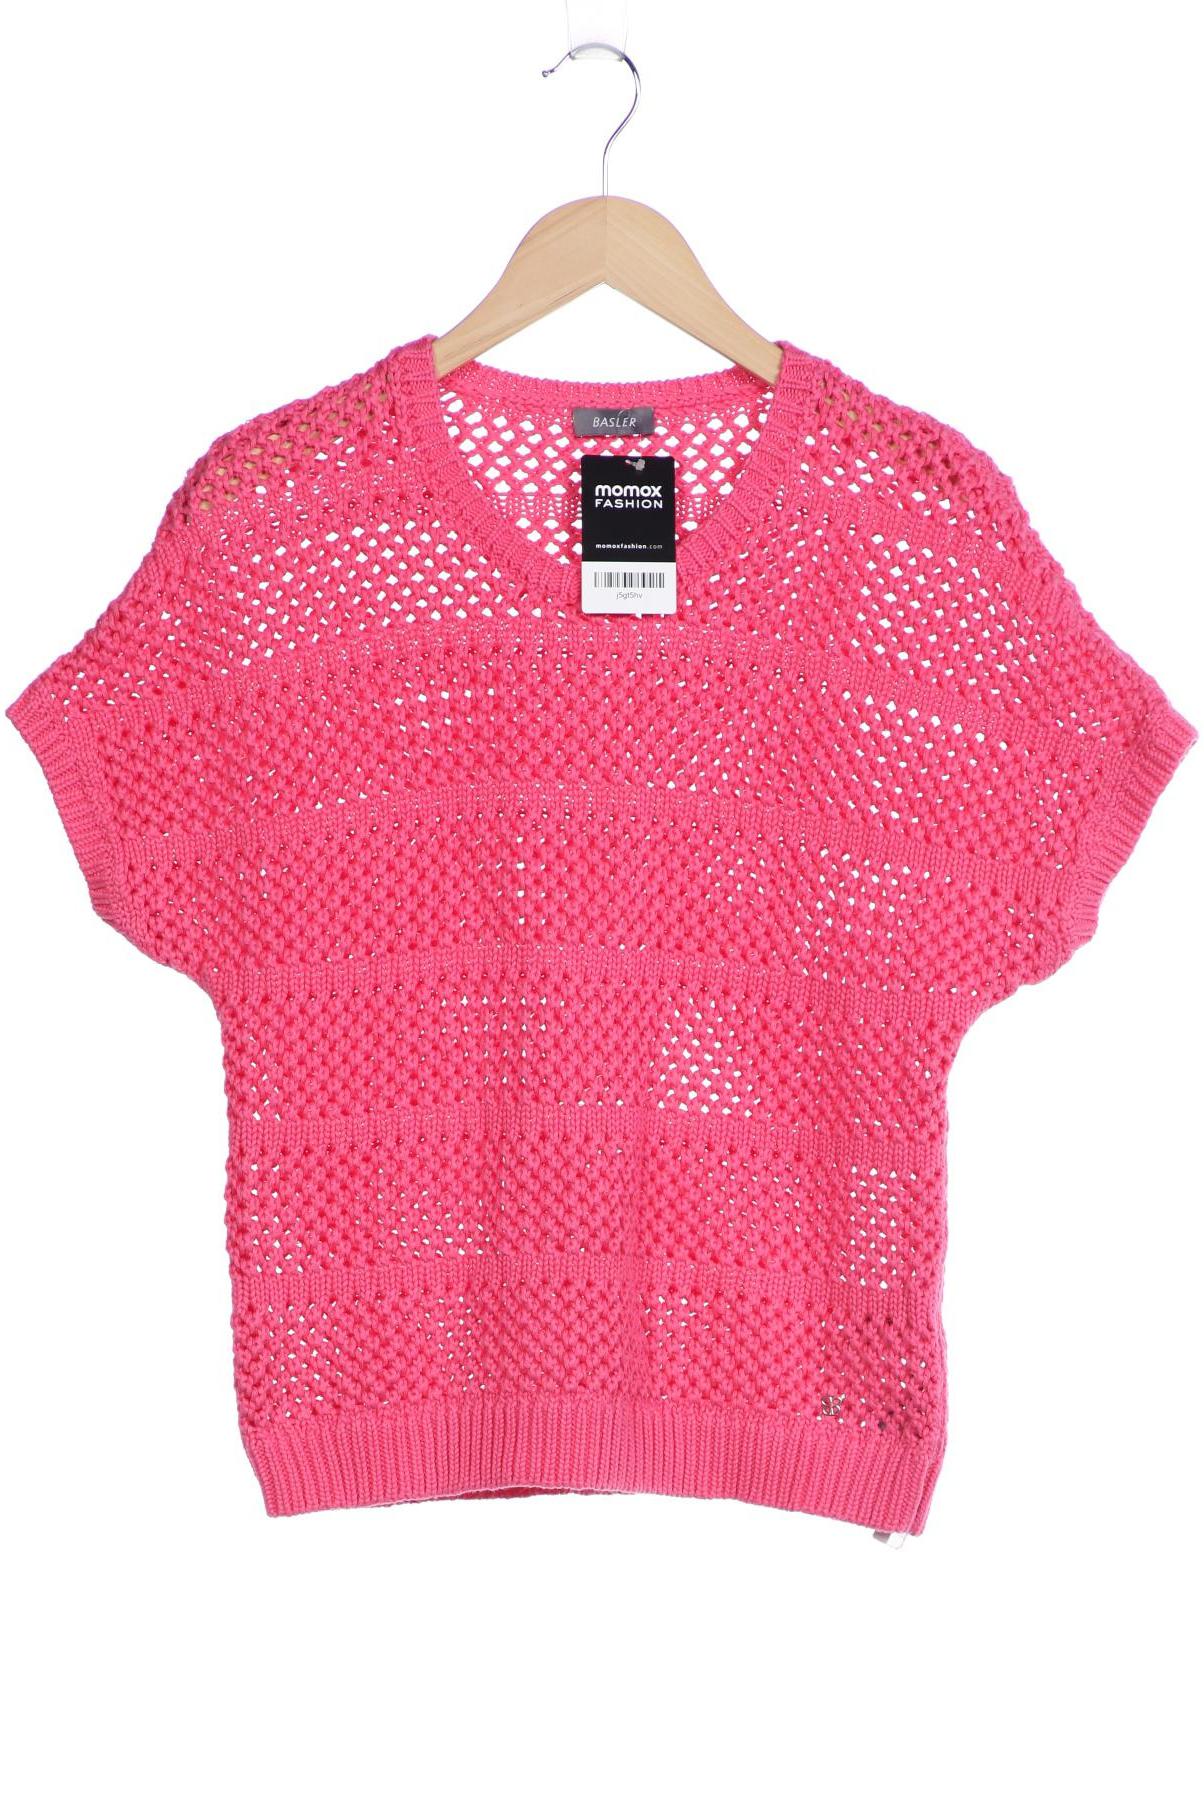 Basler Damen Pullover, pink, Gr. 36 von Basler